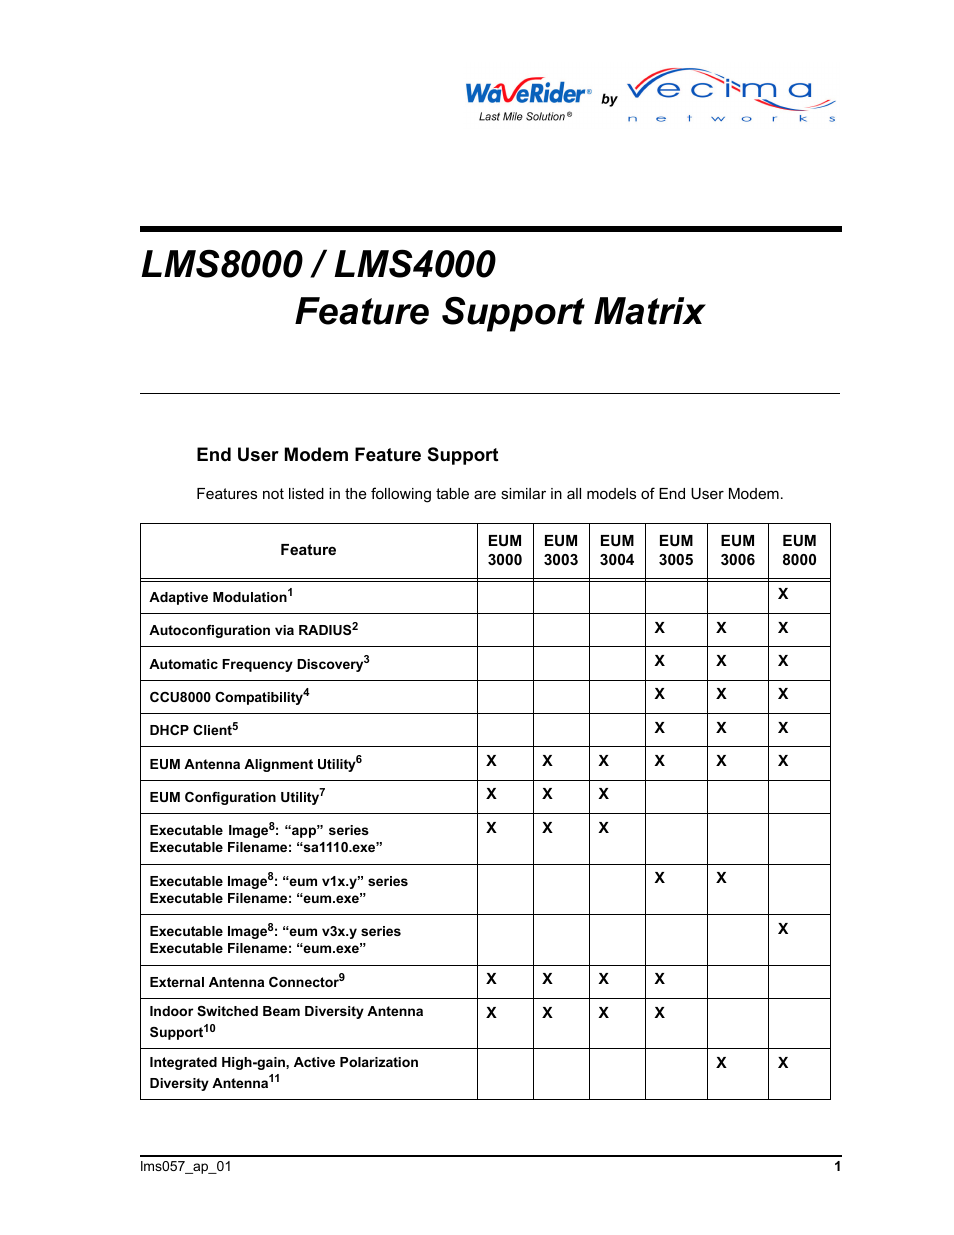 SUPPORT MATRIX LMS4000